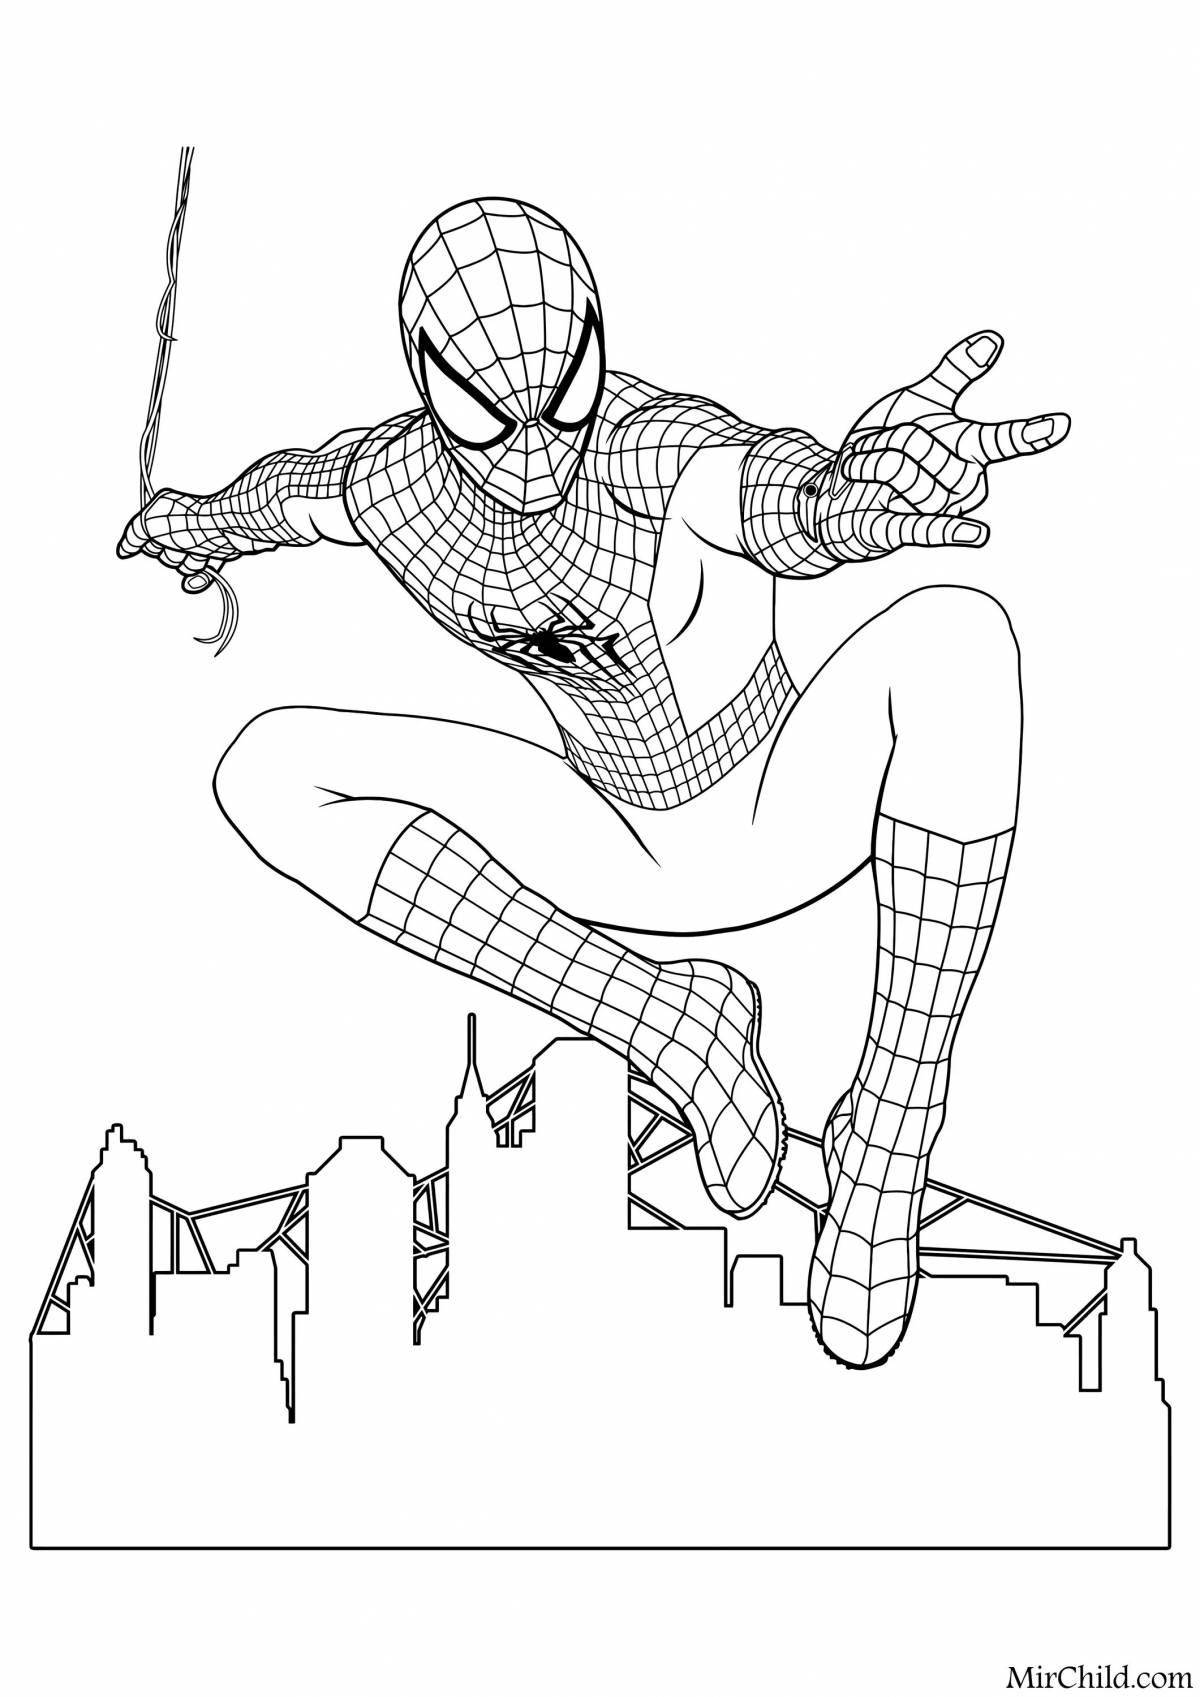 High voltage spiderman coloring book